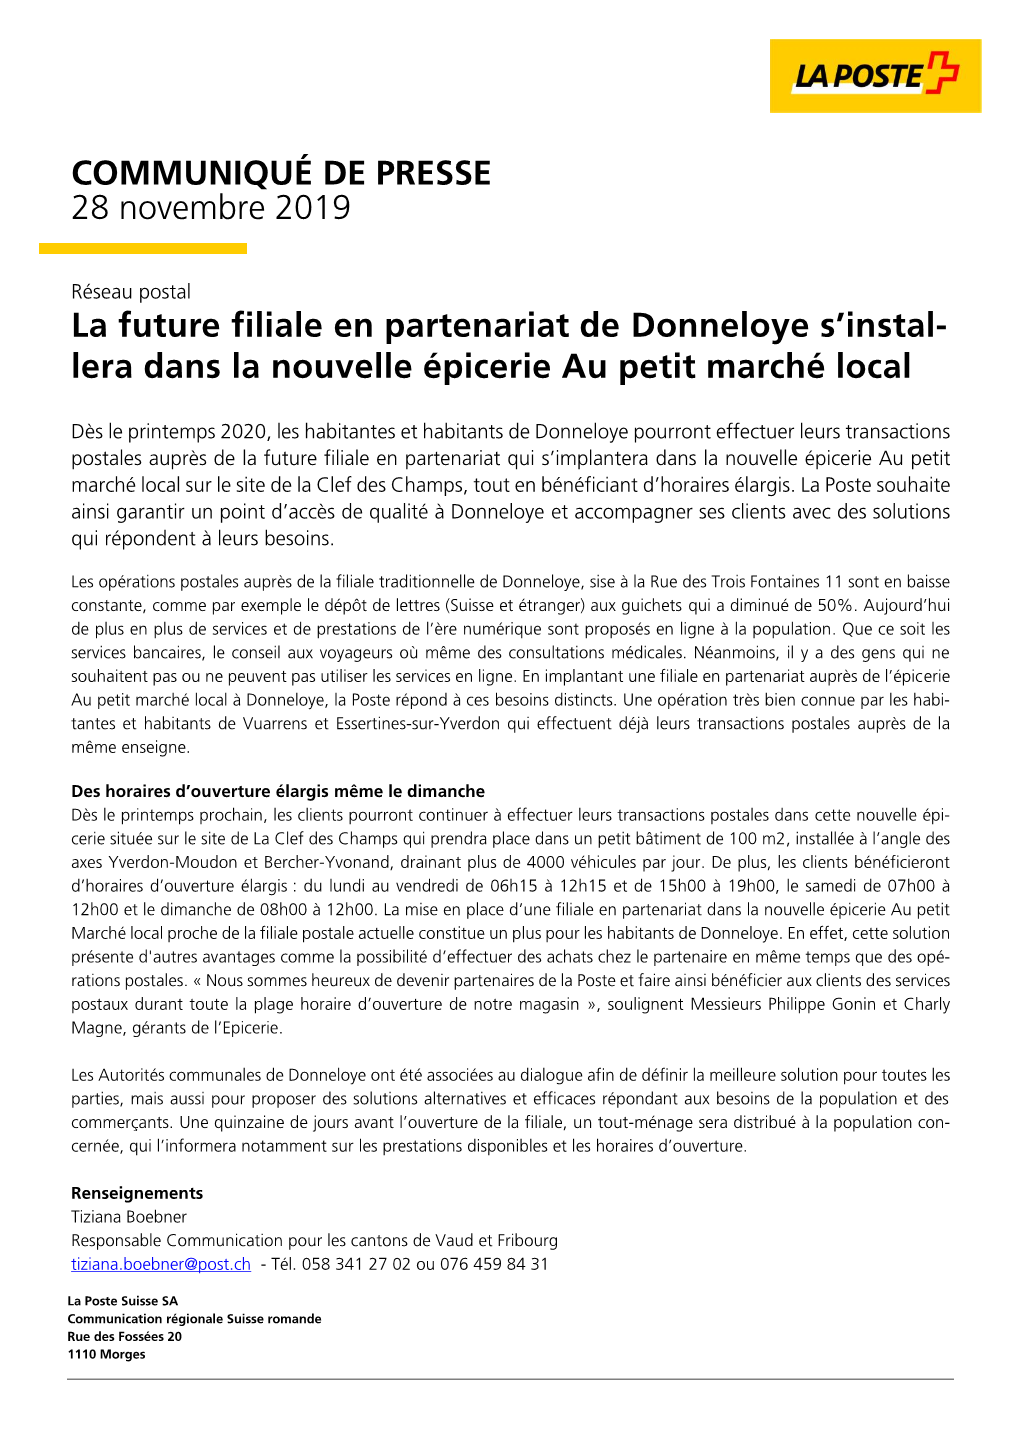 Donneloye/VD: La Future Filiale En Partenariat